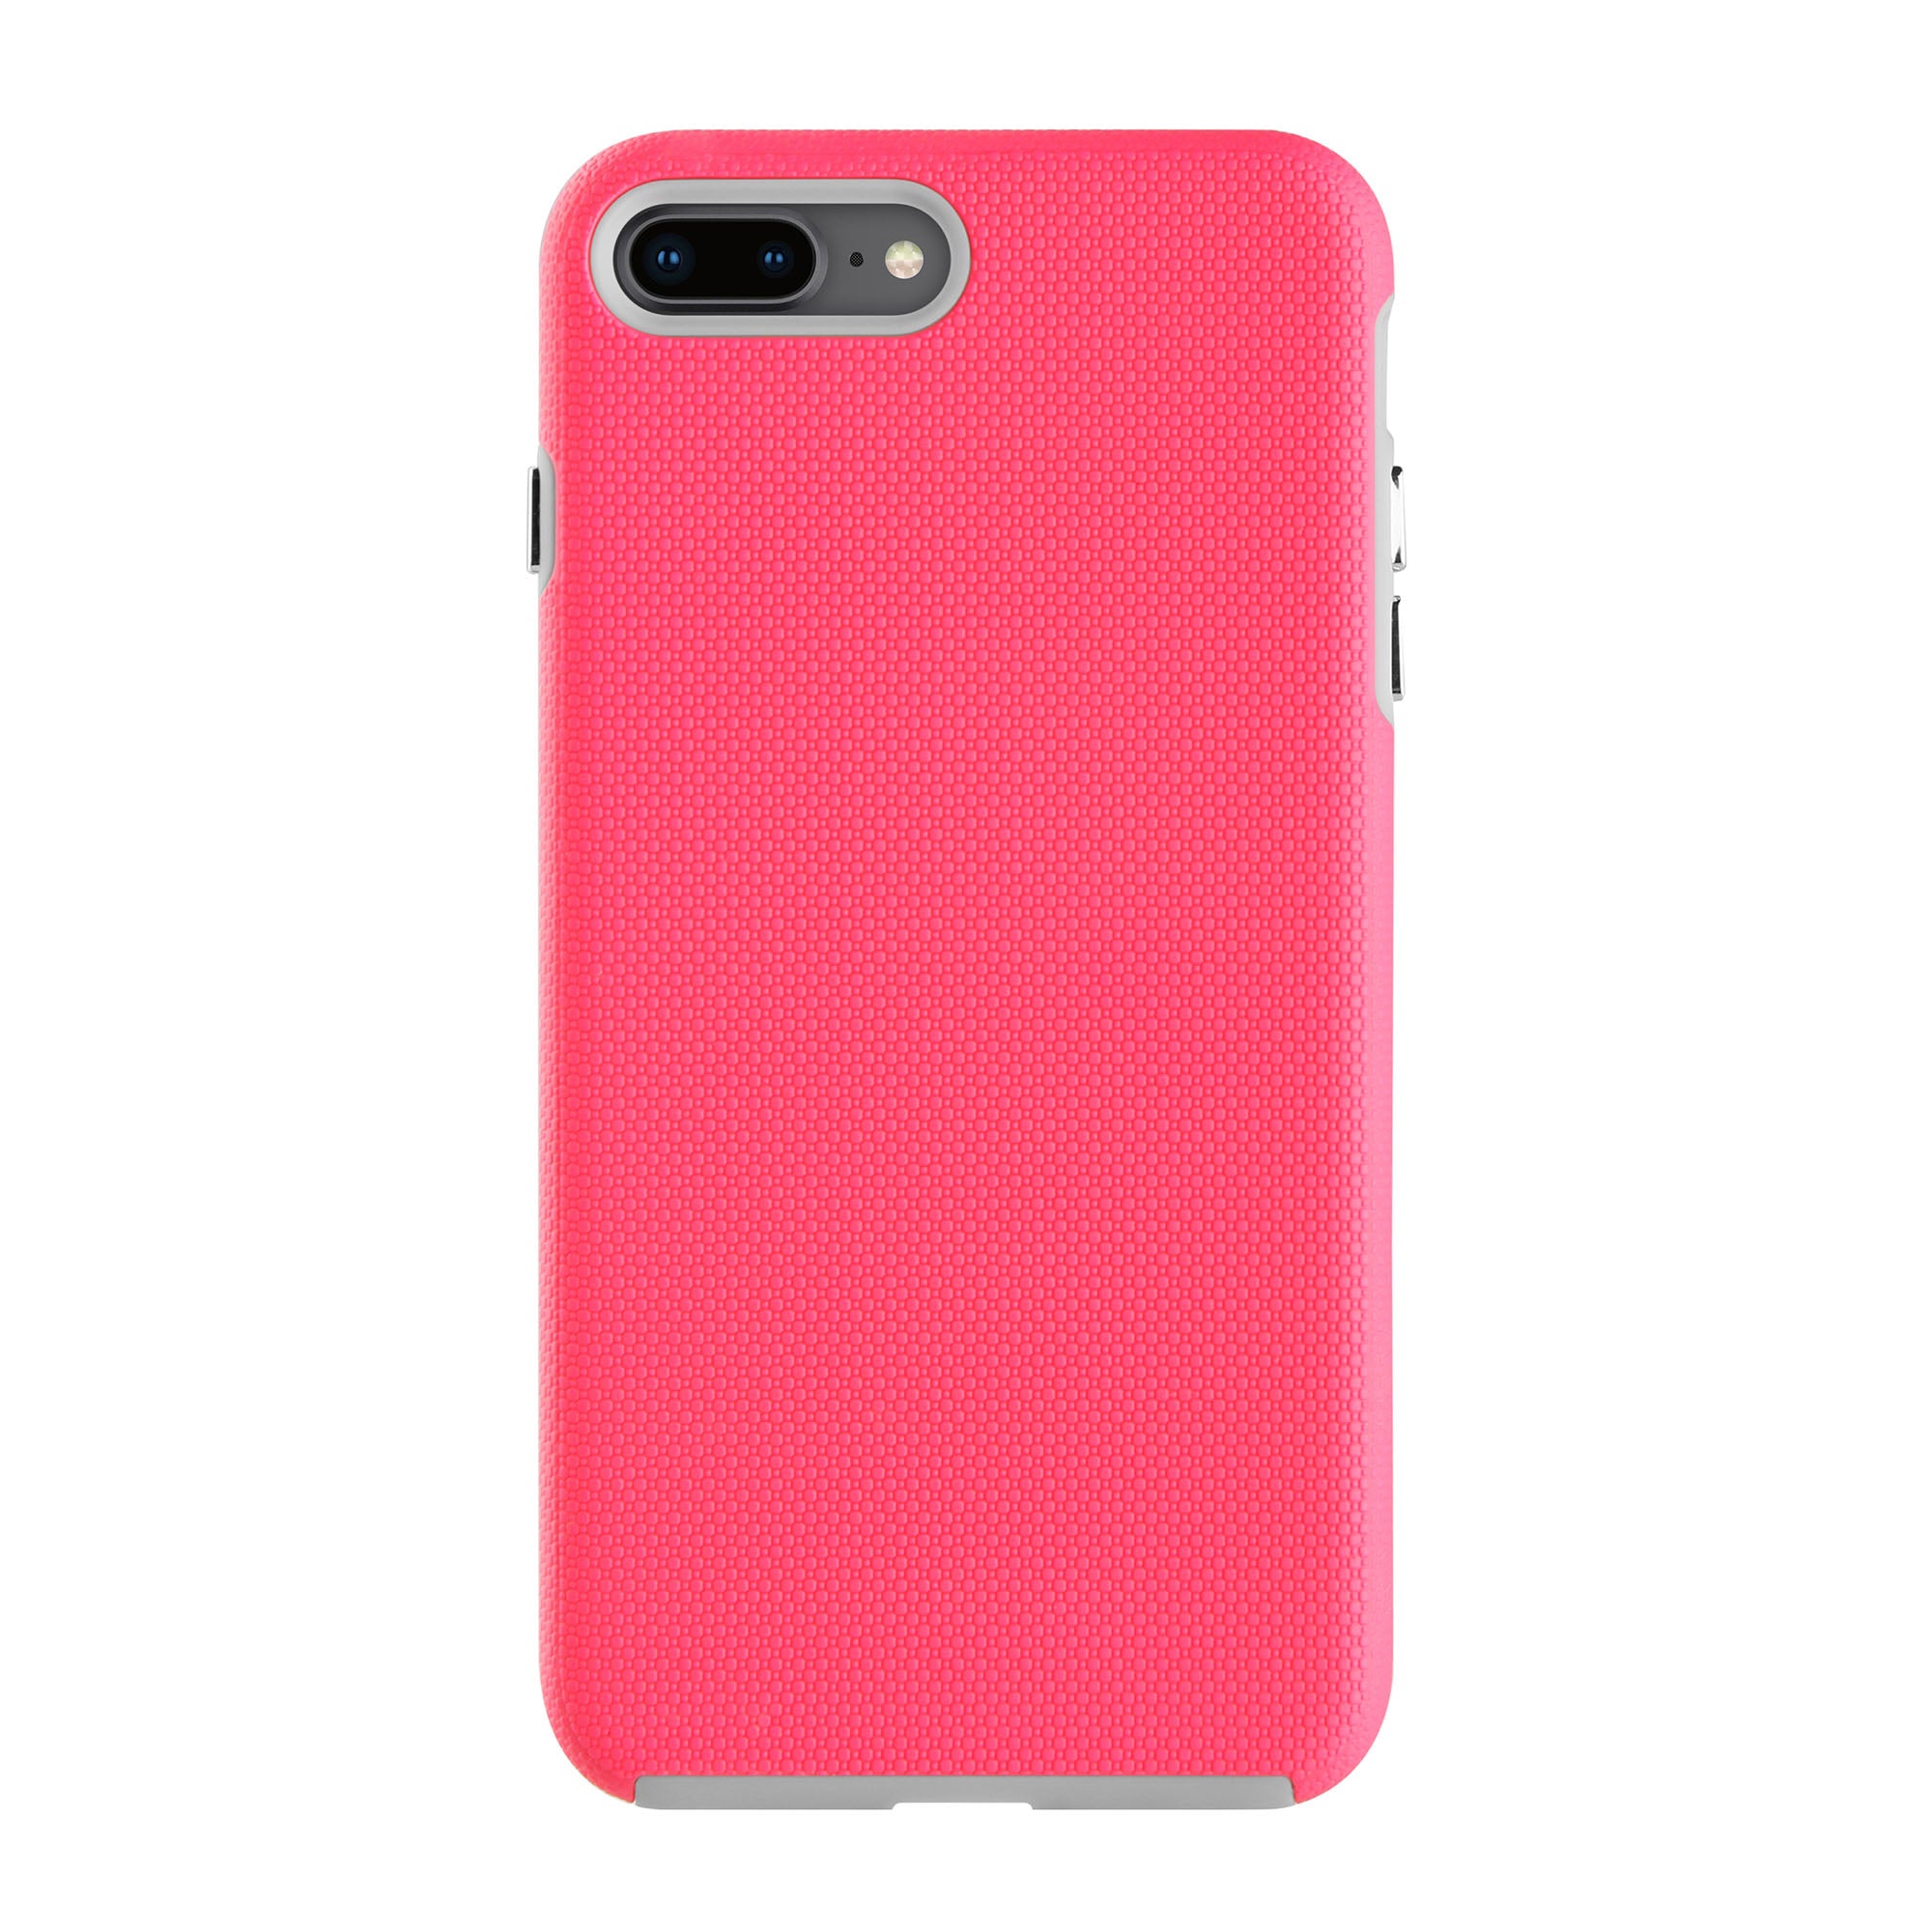 iPhone 8 Plus/7 Plus Xqisit Pink Armet Protective case - 15-03108